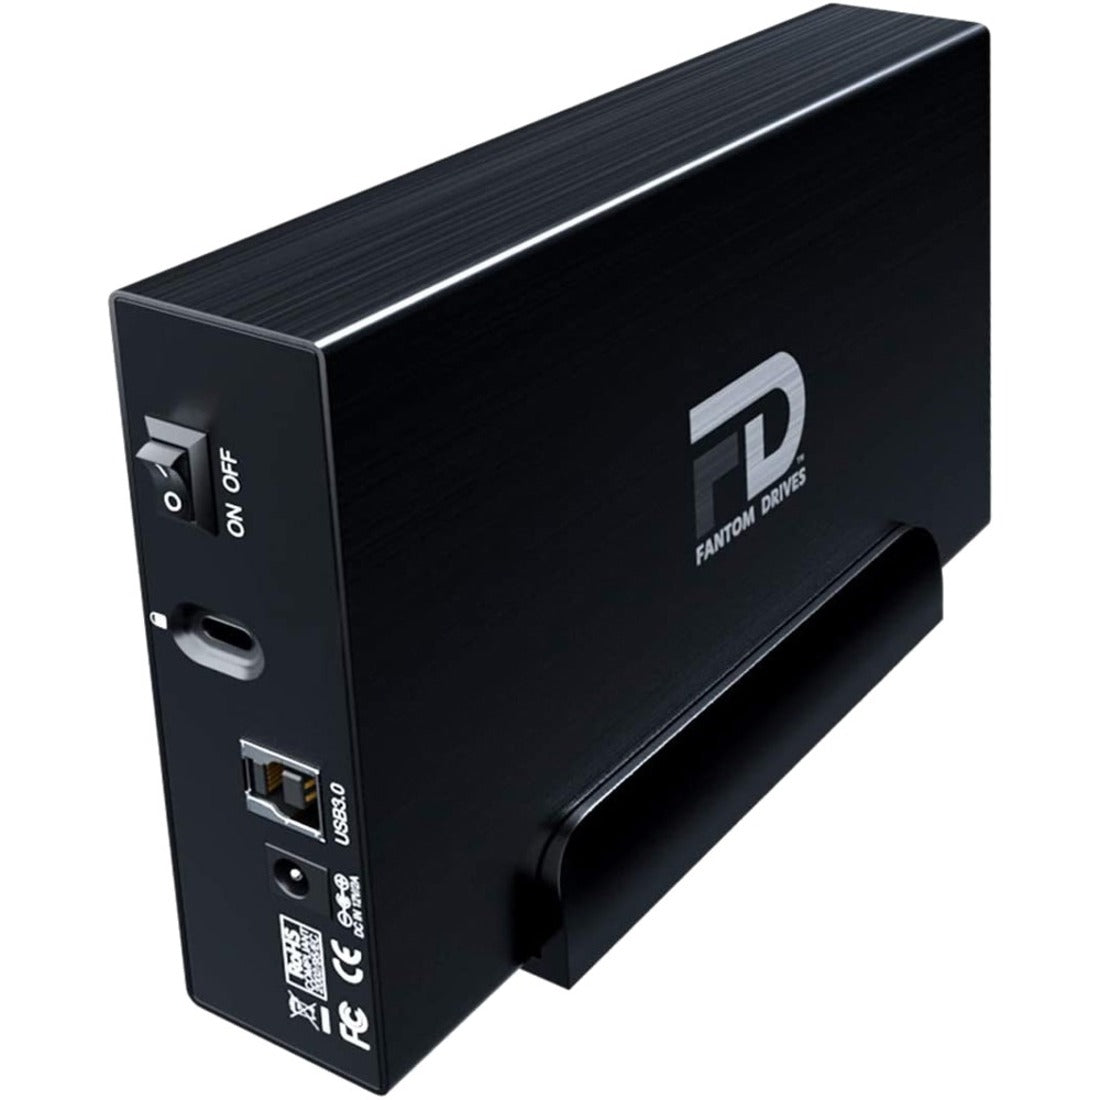 Fantom Drives GF3B2000U GFORCE 2TB External Hard Drive - USB 3.2 Gen 1 5Gb/s - Black, 3-Year Warranty